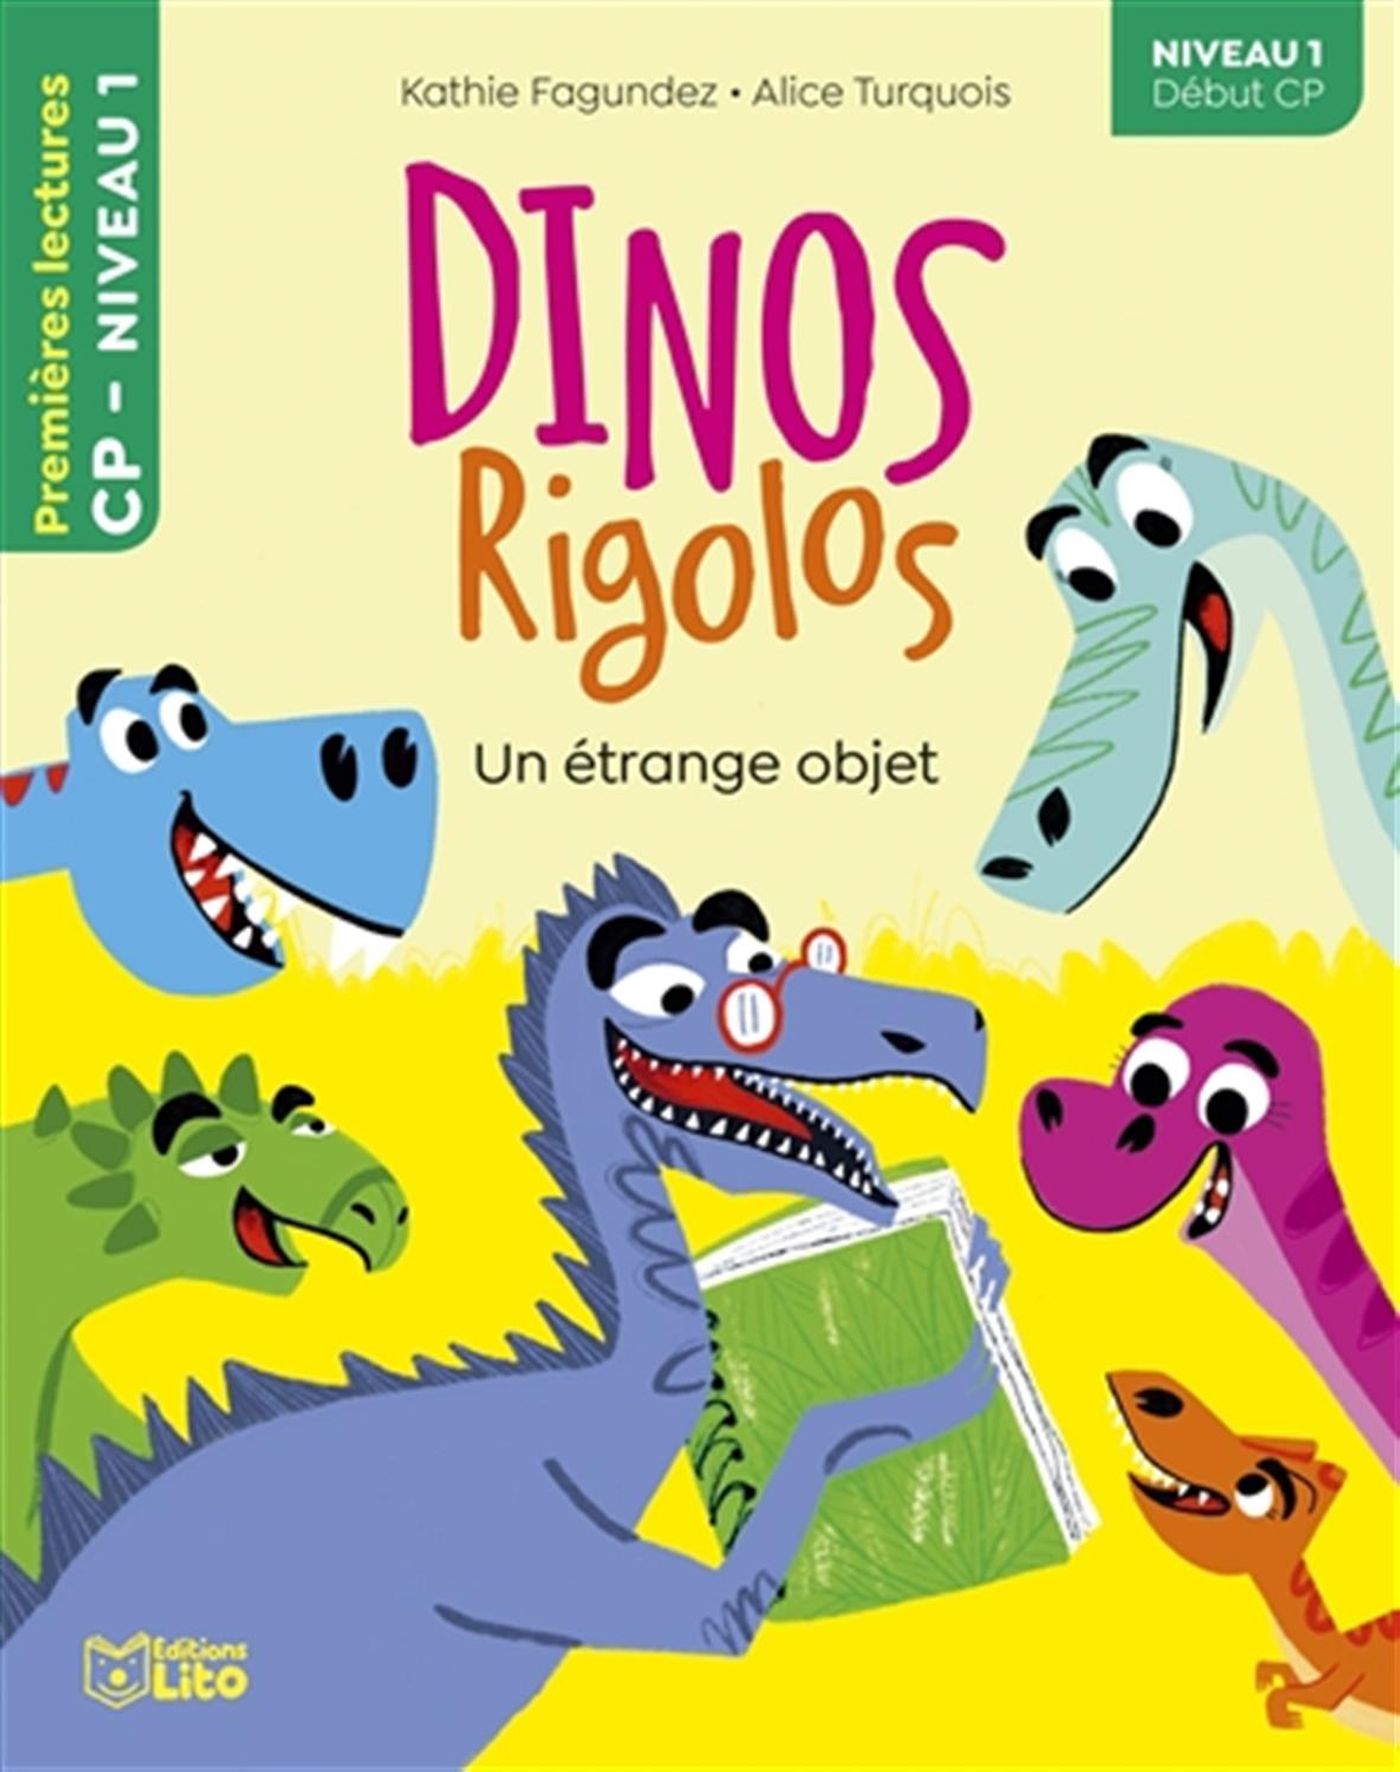 Jeux de mots rigolos - Editions Lito